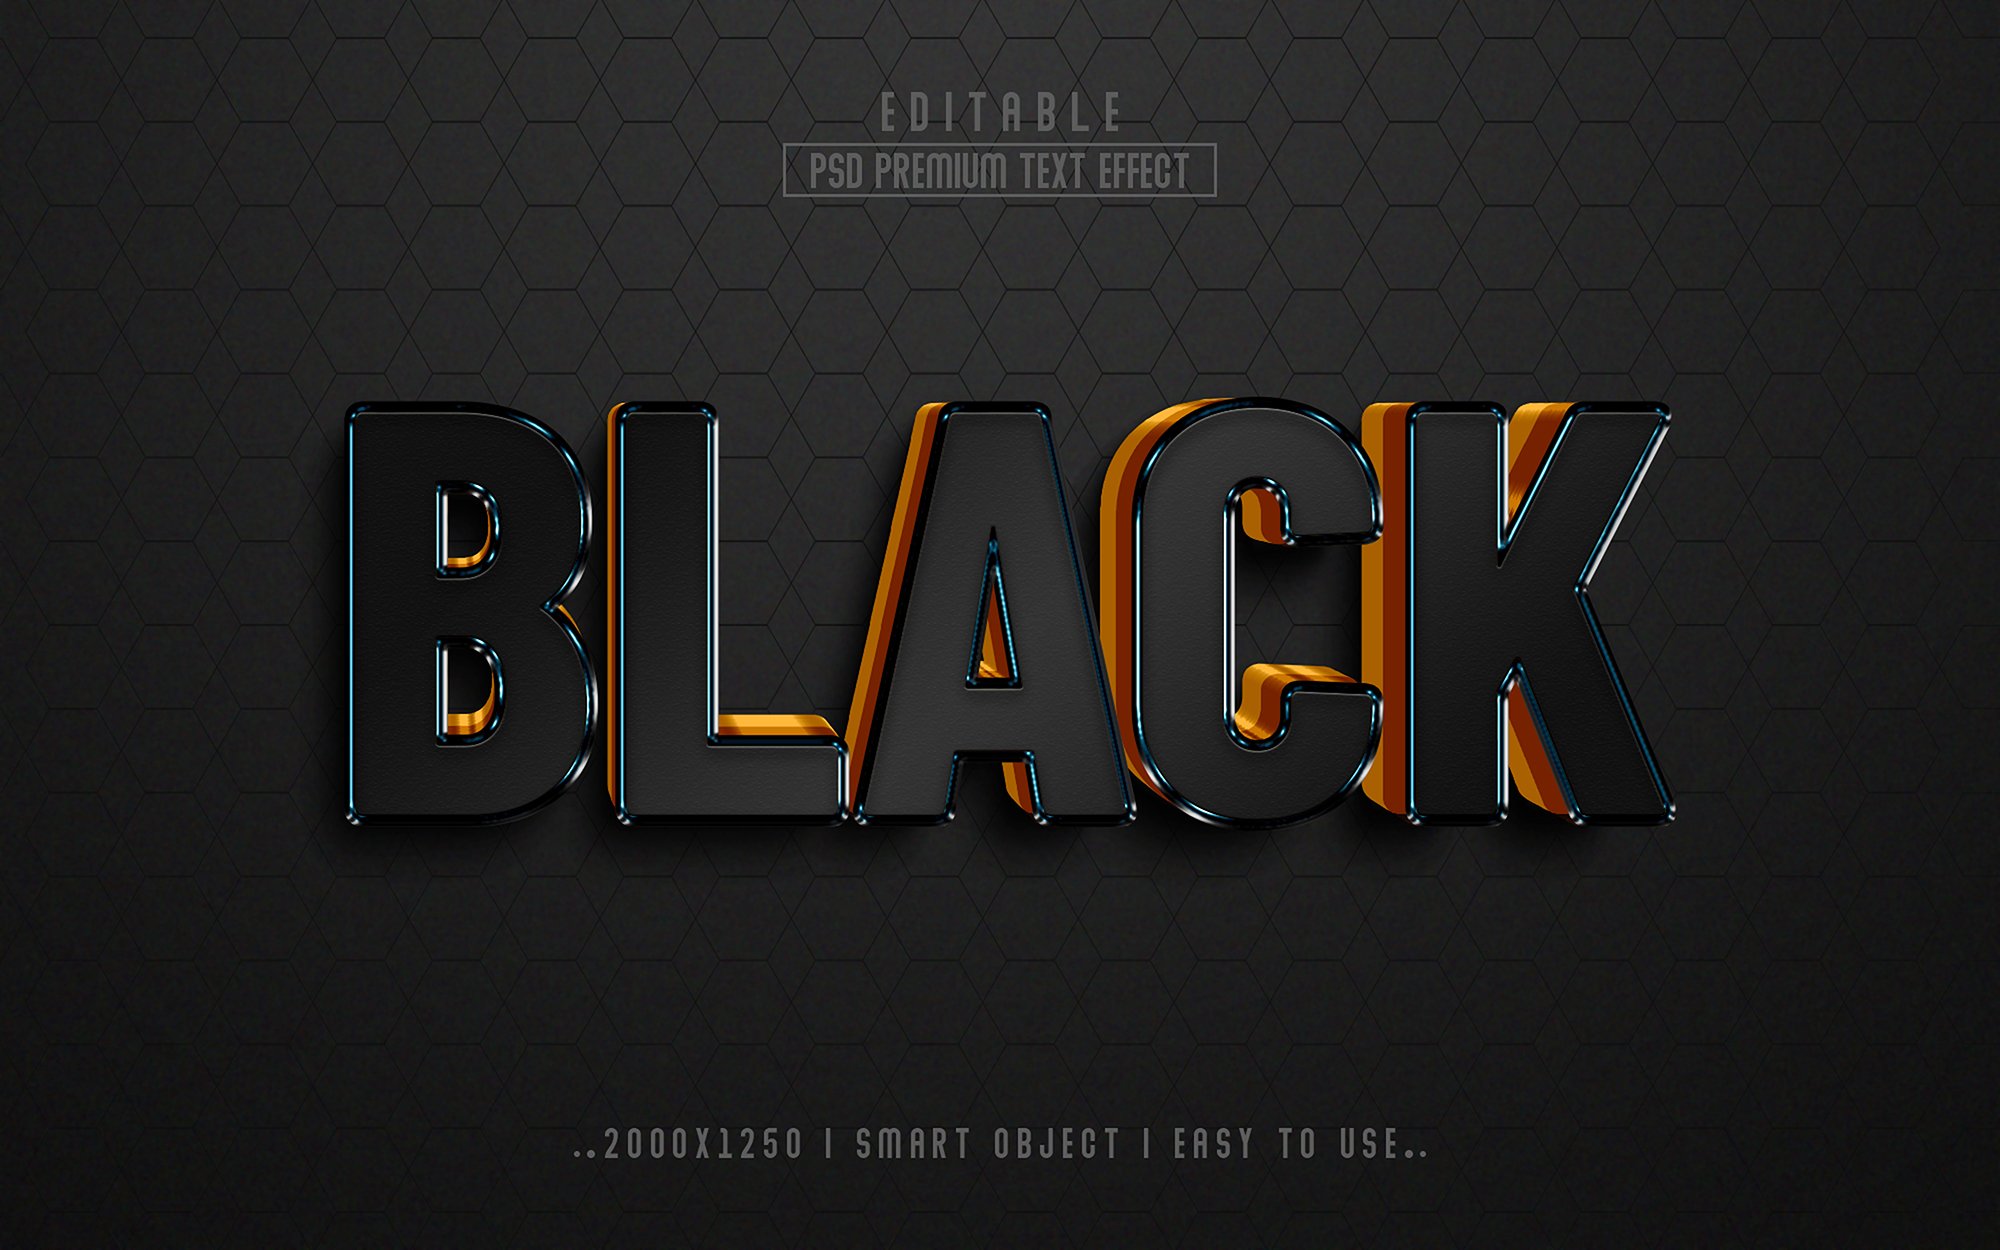 Black 3D Editable psd Text Effectcover image.